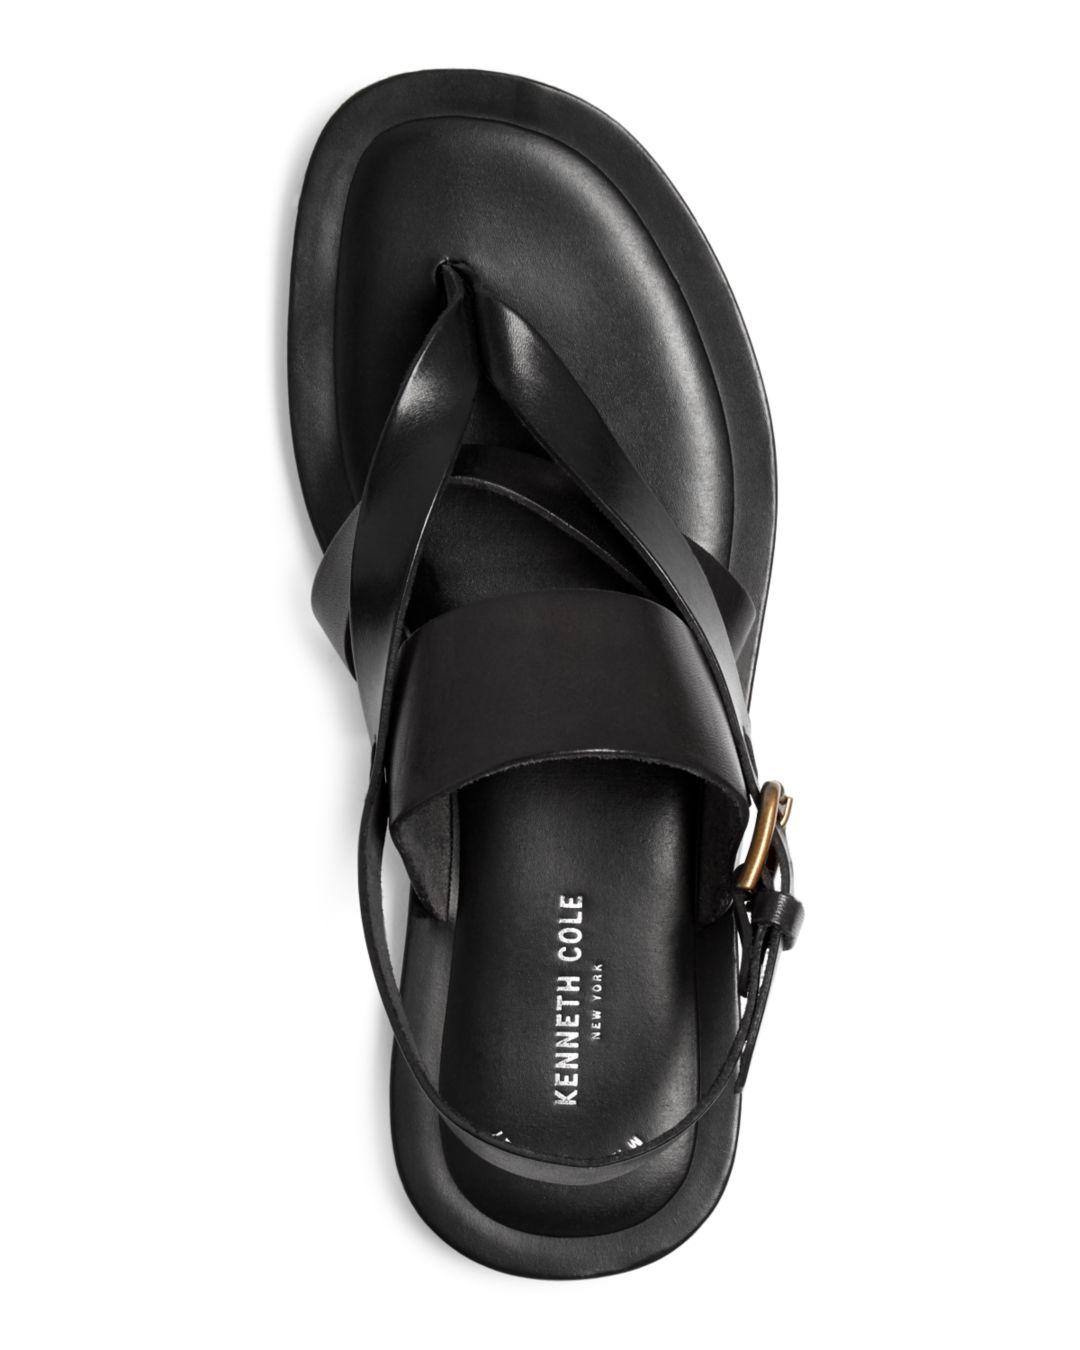 Brown Brand New Kenneth Cole Reaction Men's Leather Flip Flop Sandal 